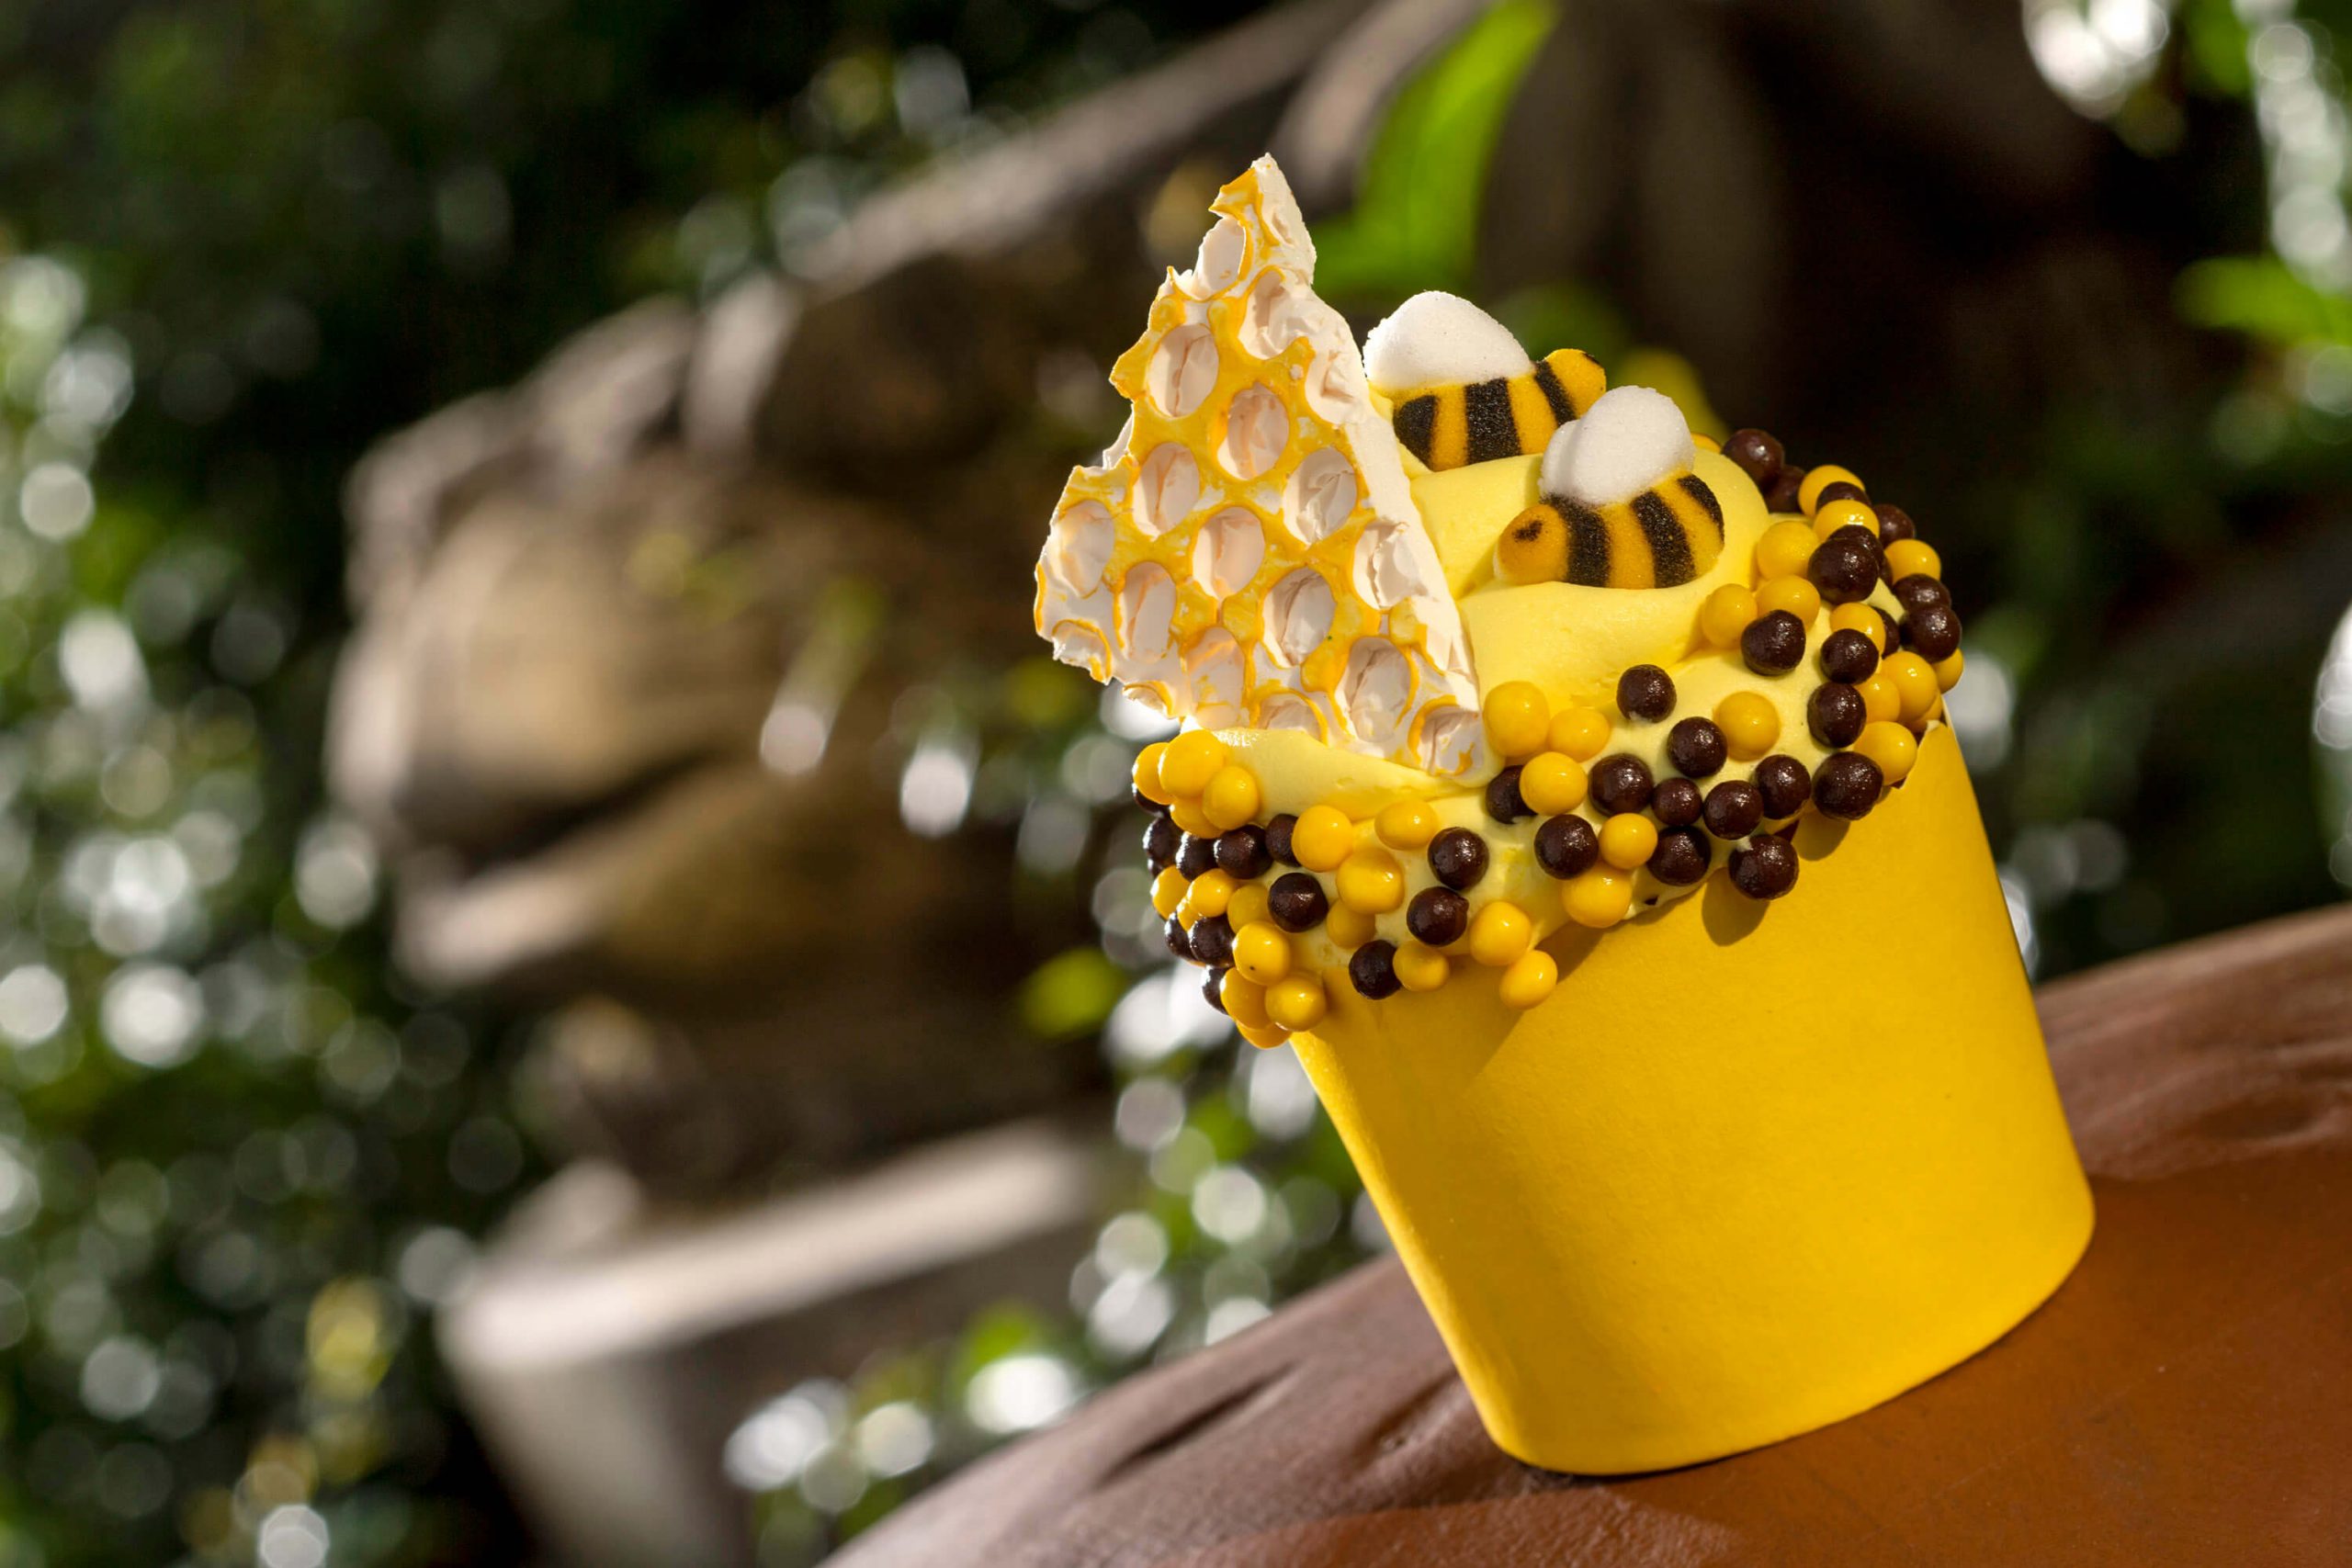 Honeybee cupcake for Earth Day at Disney's Animal Kingdom.